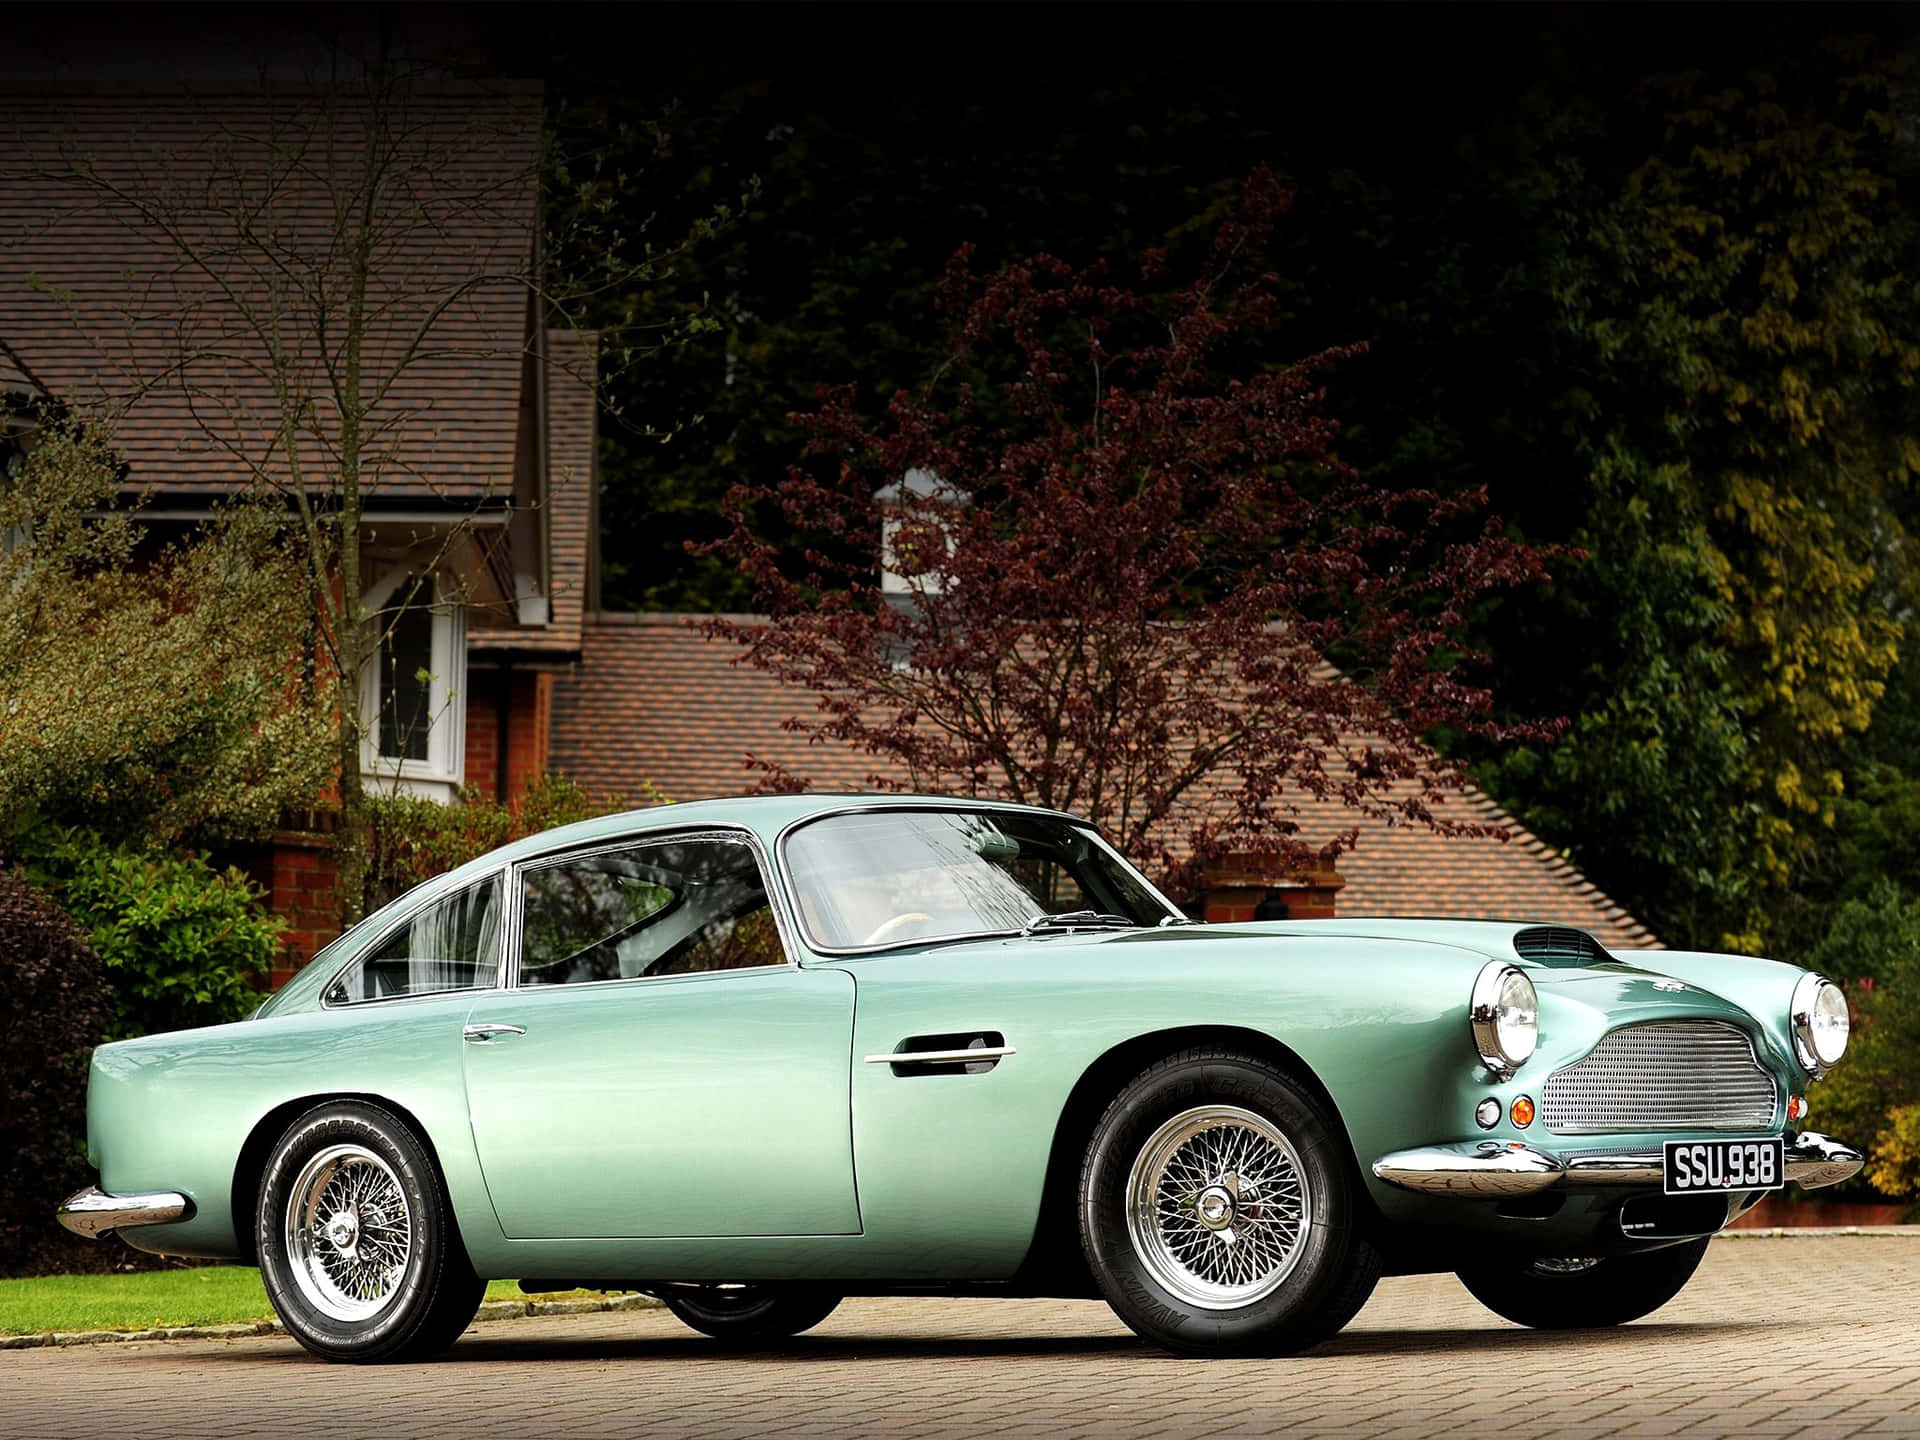 Engrøn Aston Martin Db5 Parkeret Foran Et Hus. Wallpaper